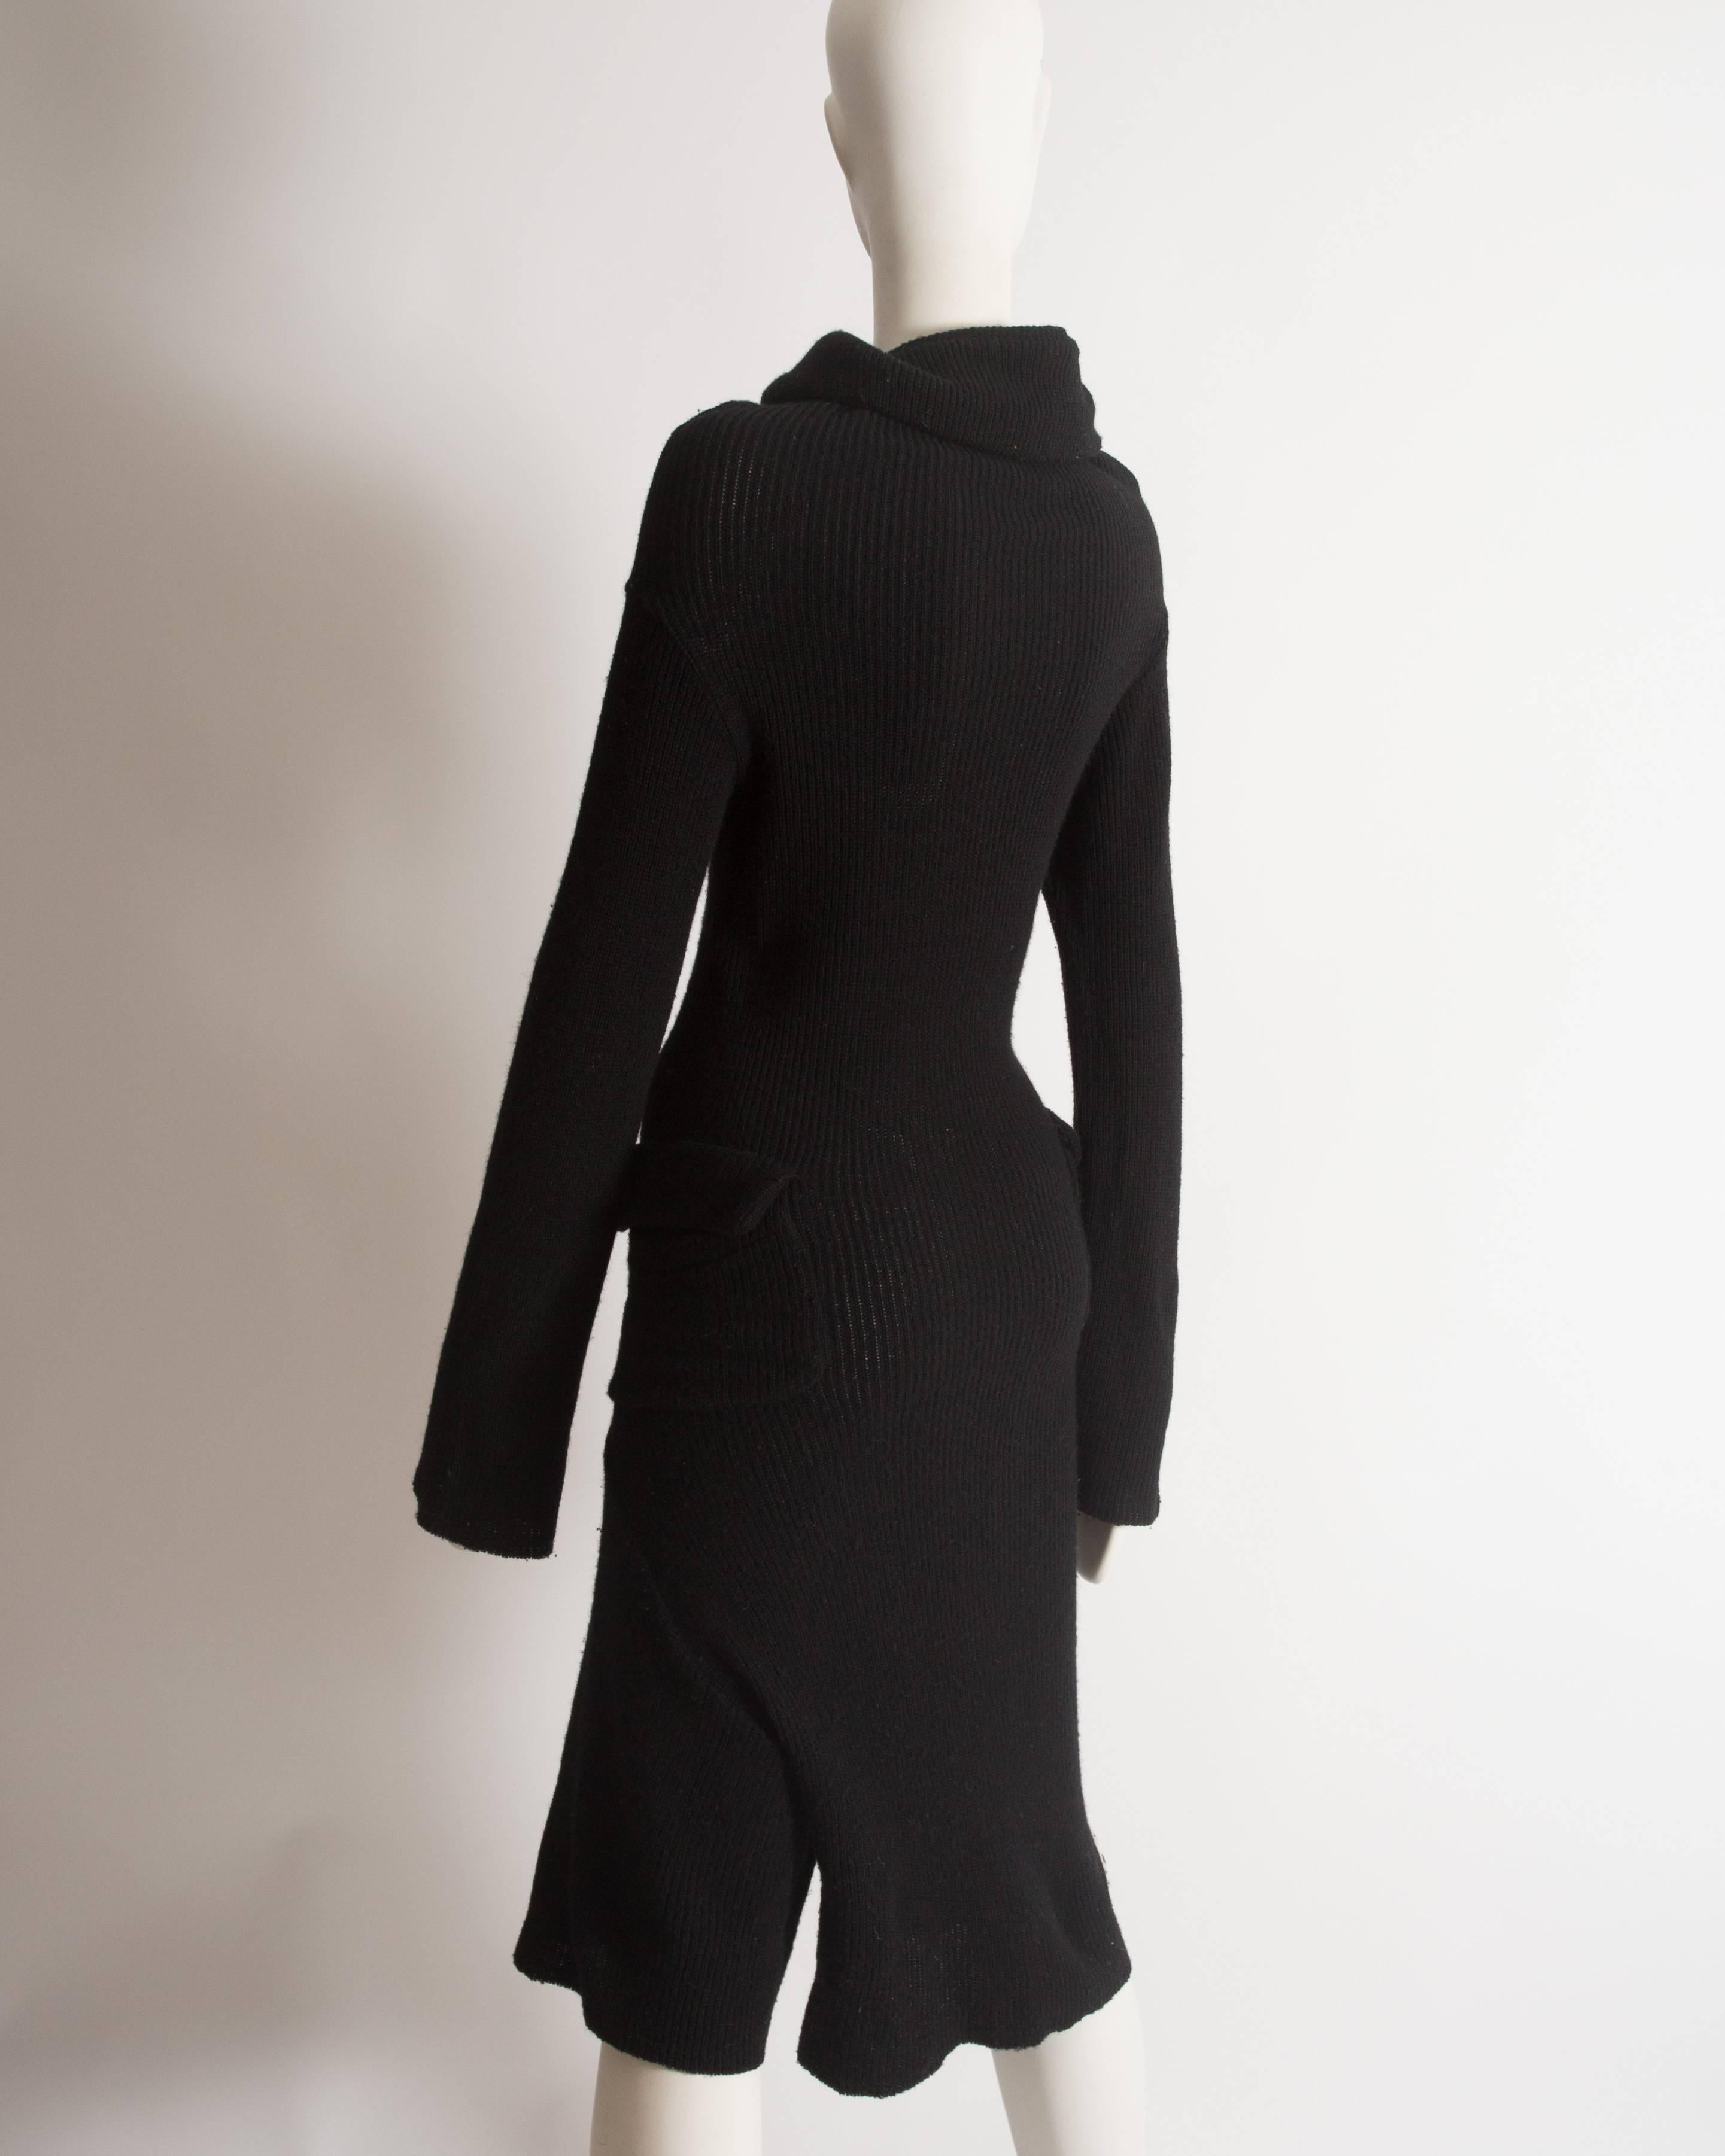 Women's Comme des Garcons black wool deconstructed playsuit, circa 2002